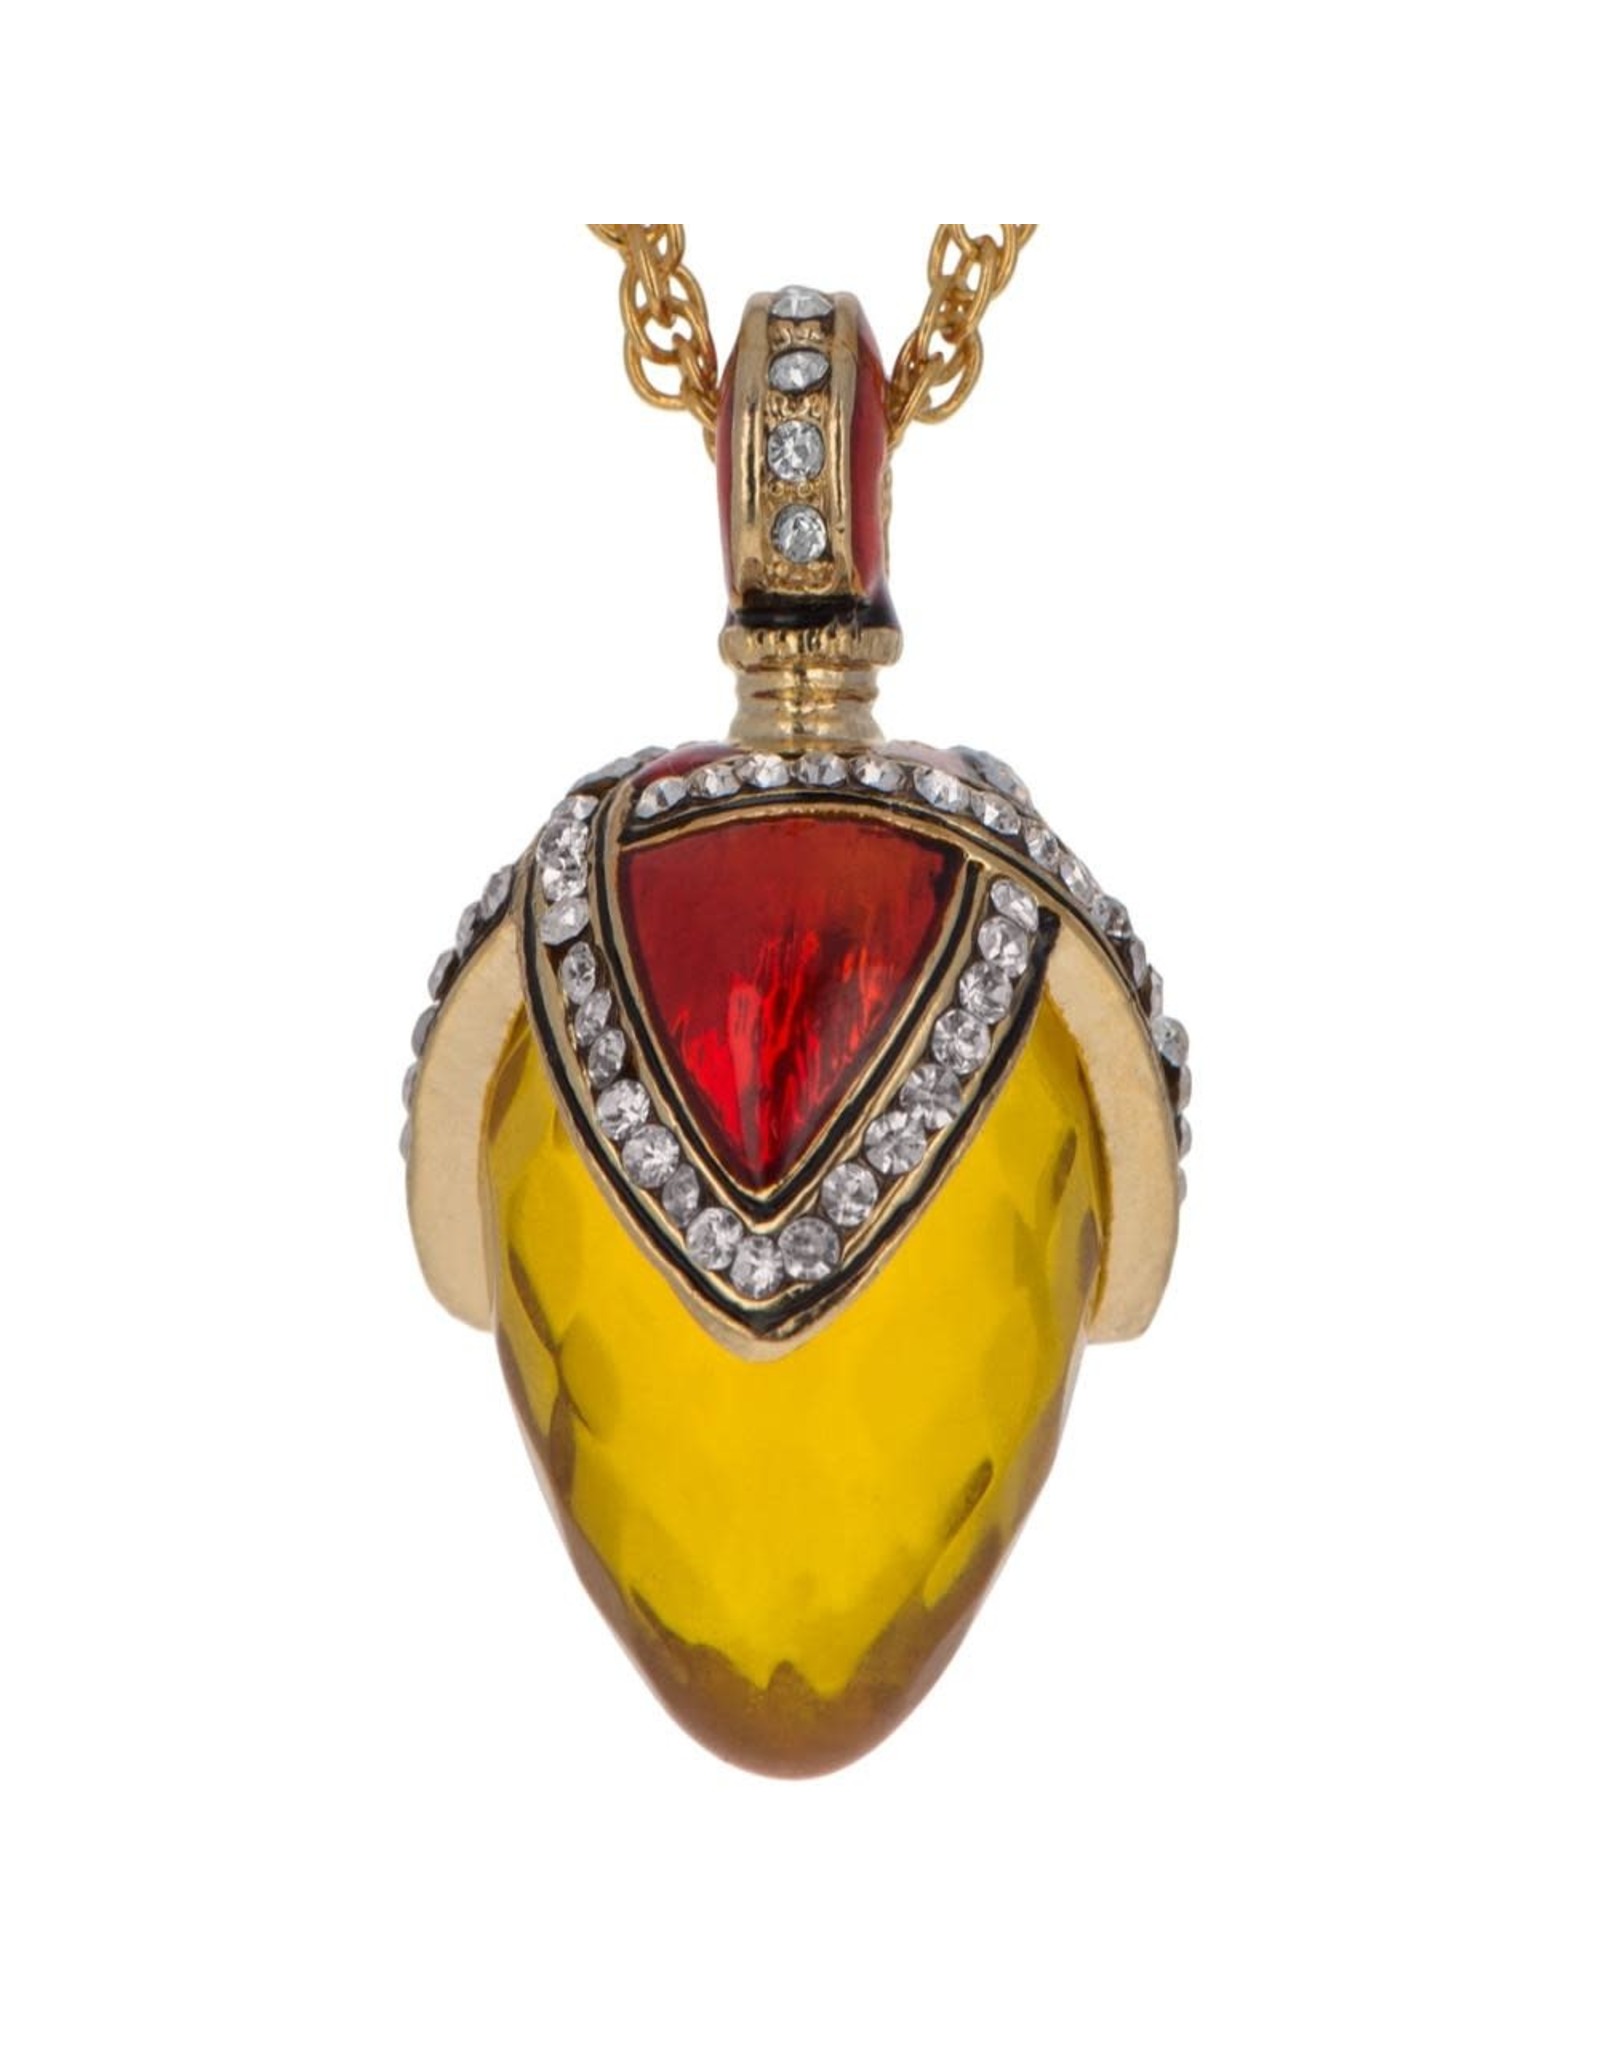 Crystal Egg Pendant Necklace "Royal Gold"